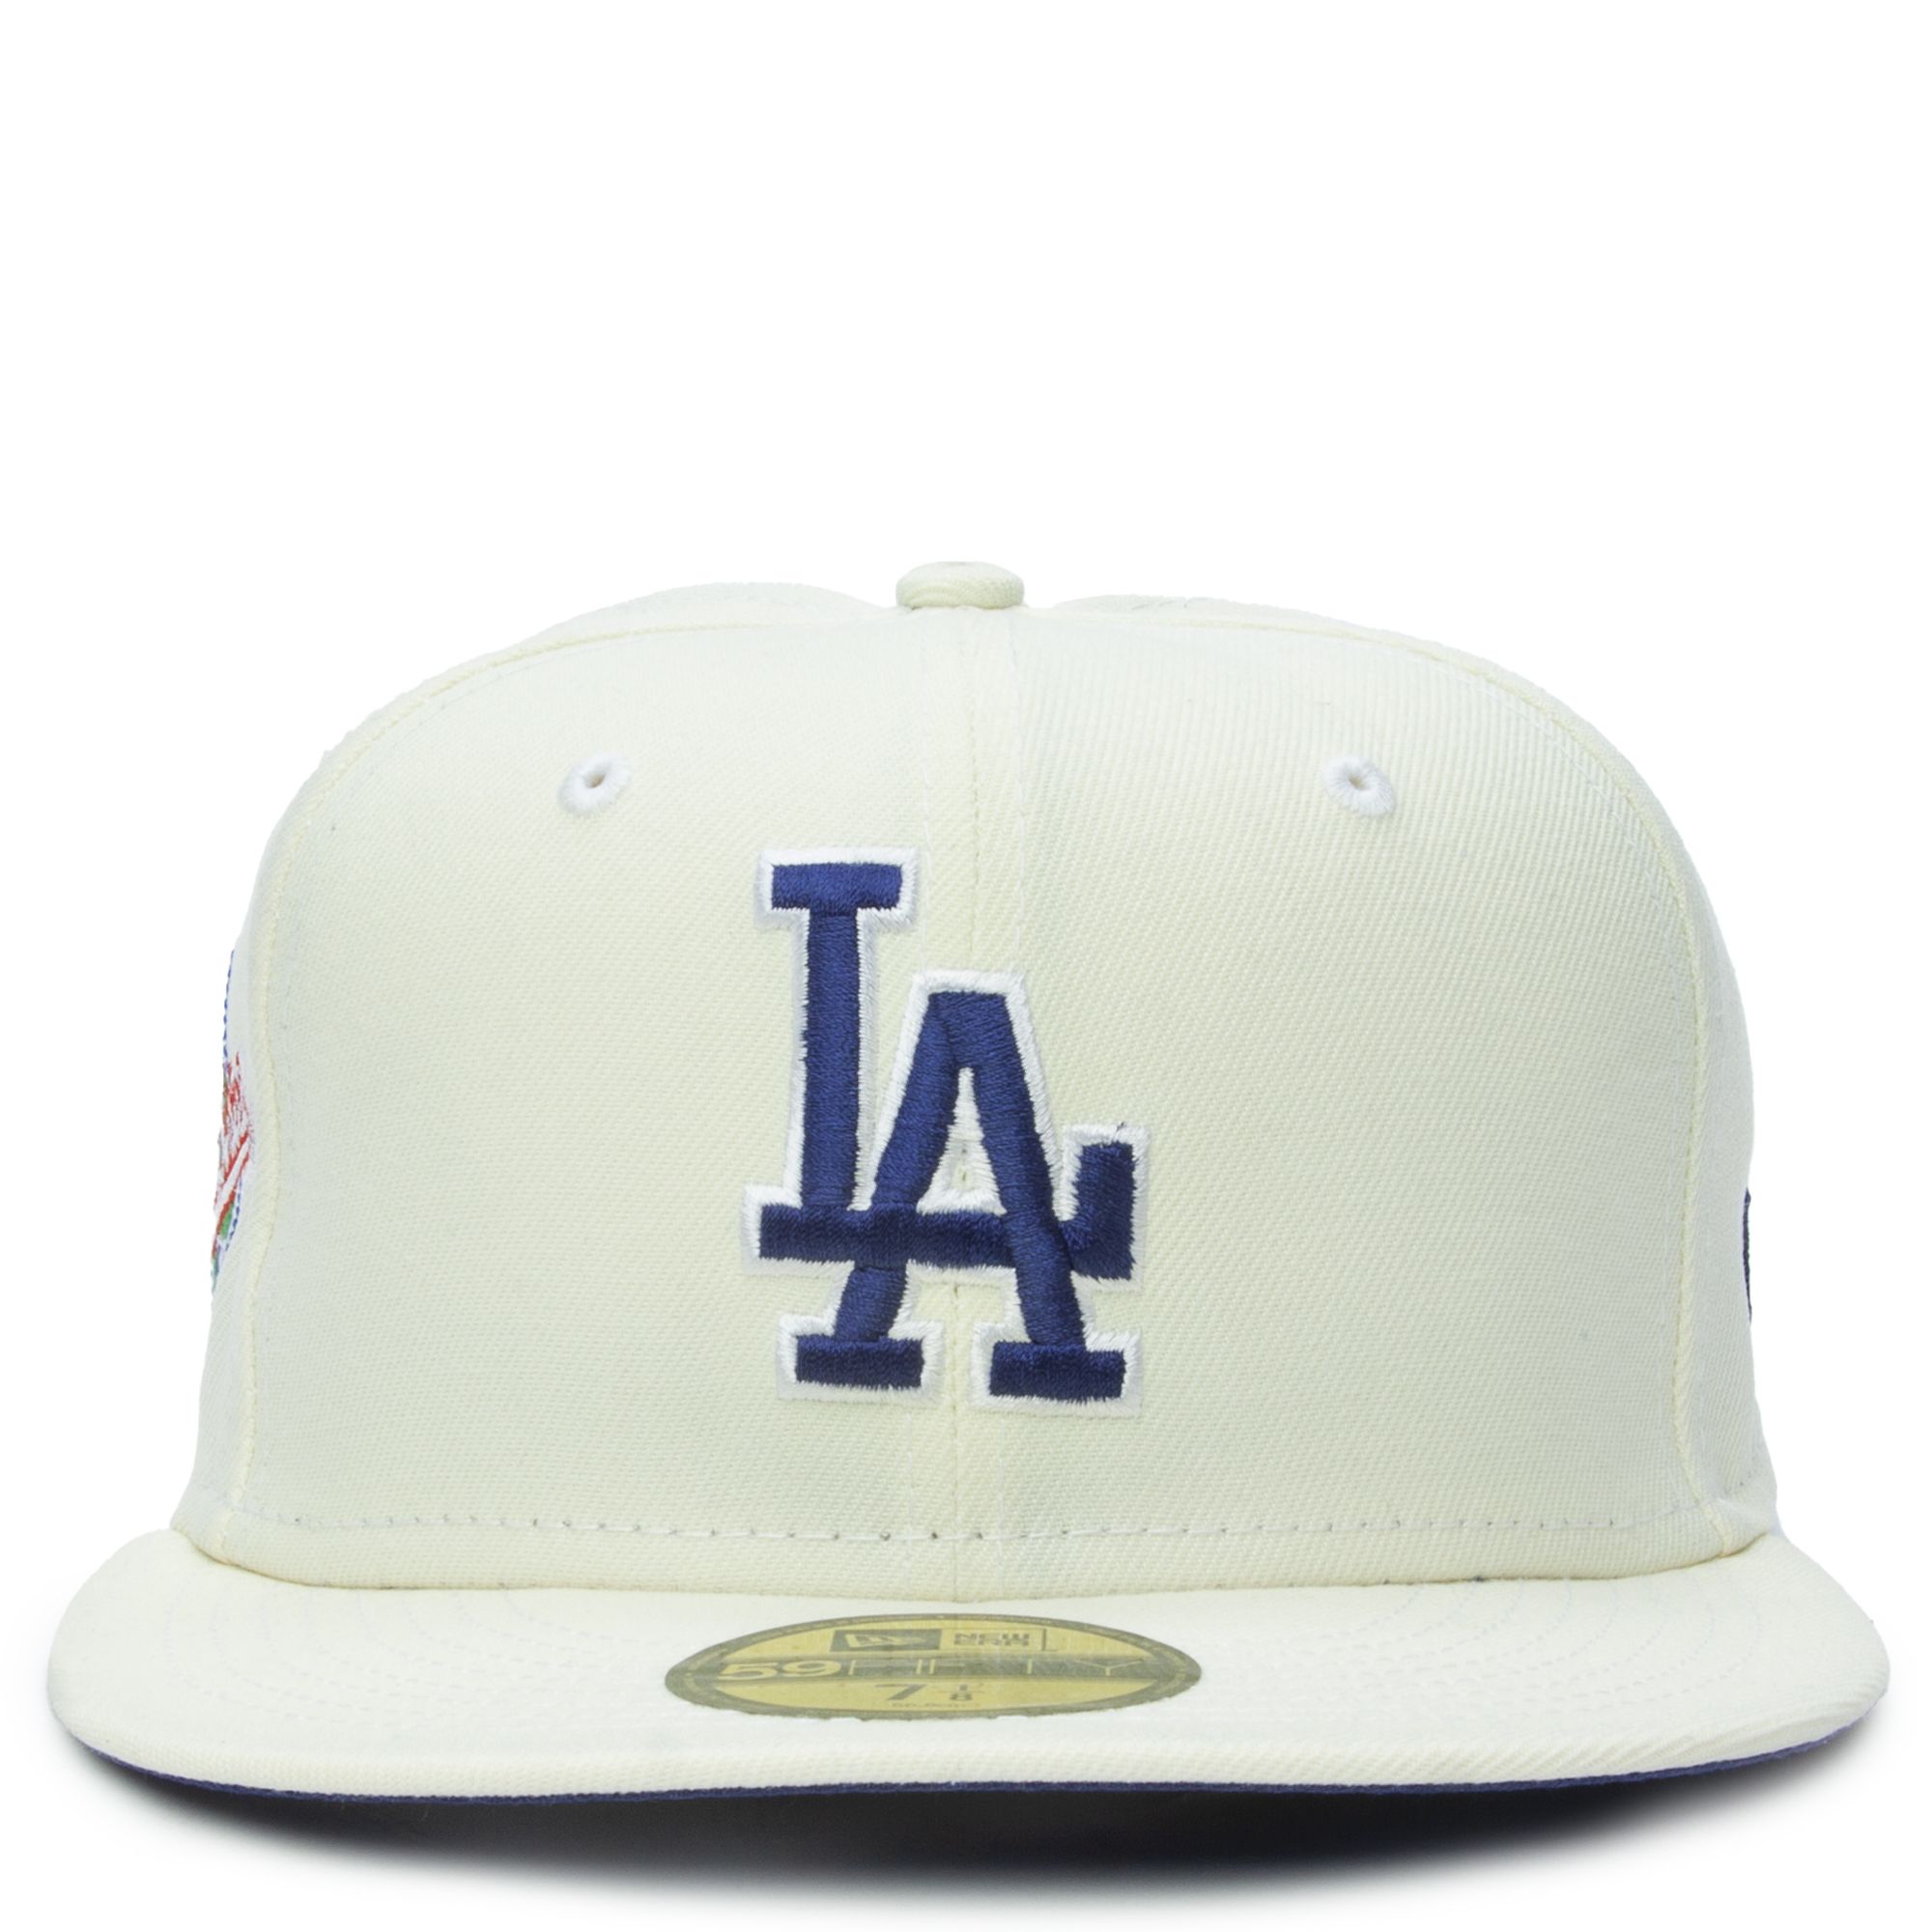 Los Angeles Dodgers Baseball Rhinestone SVG